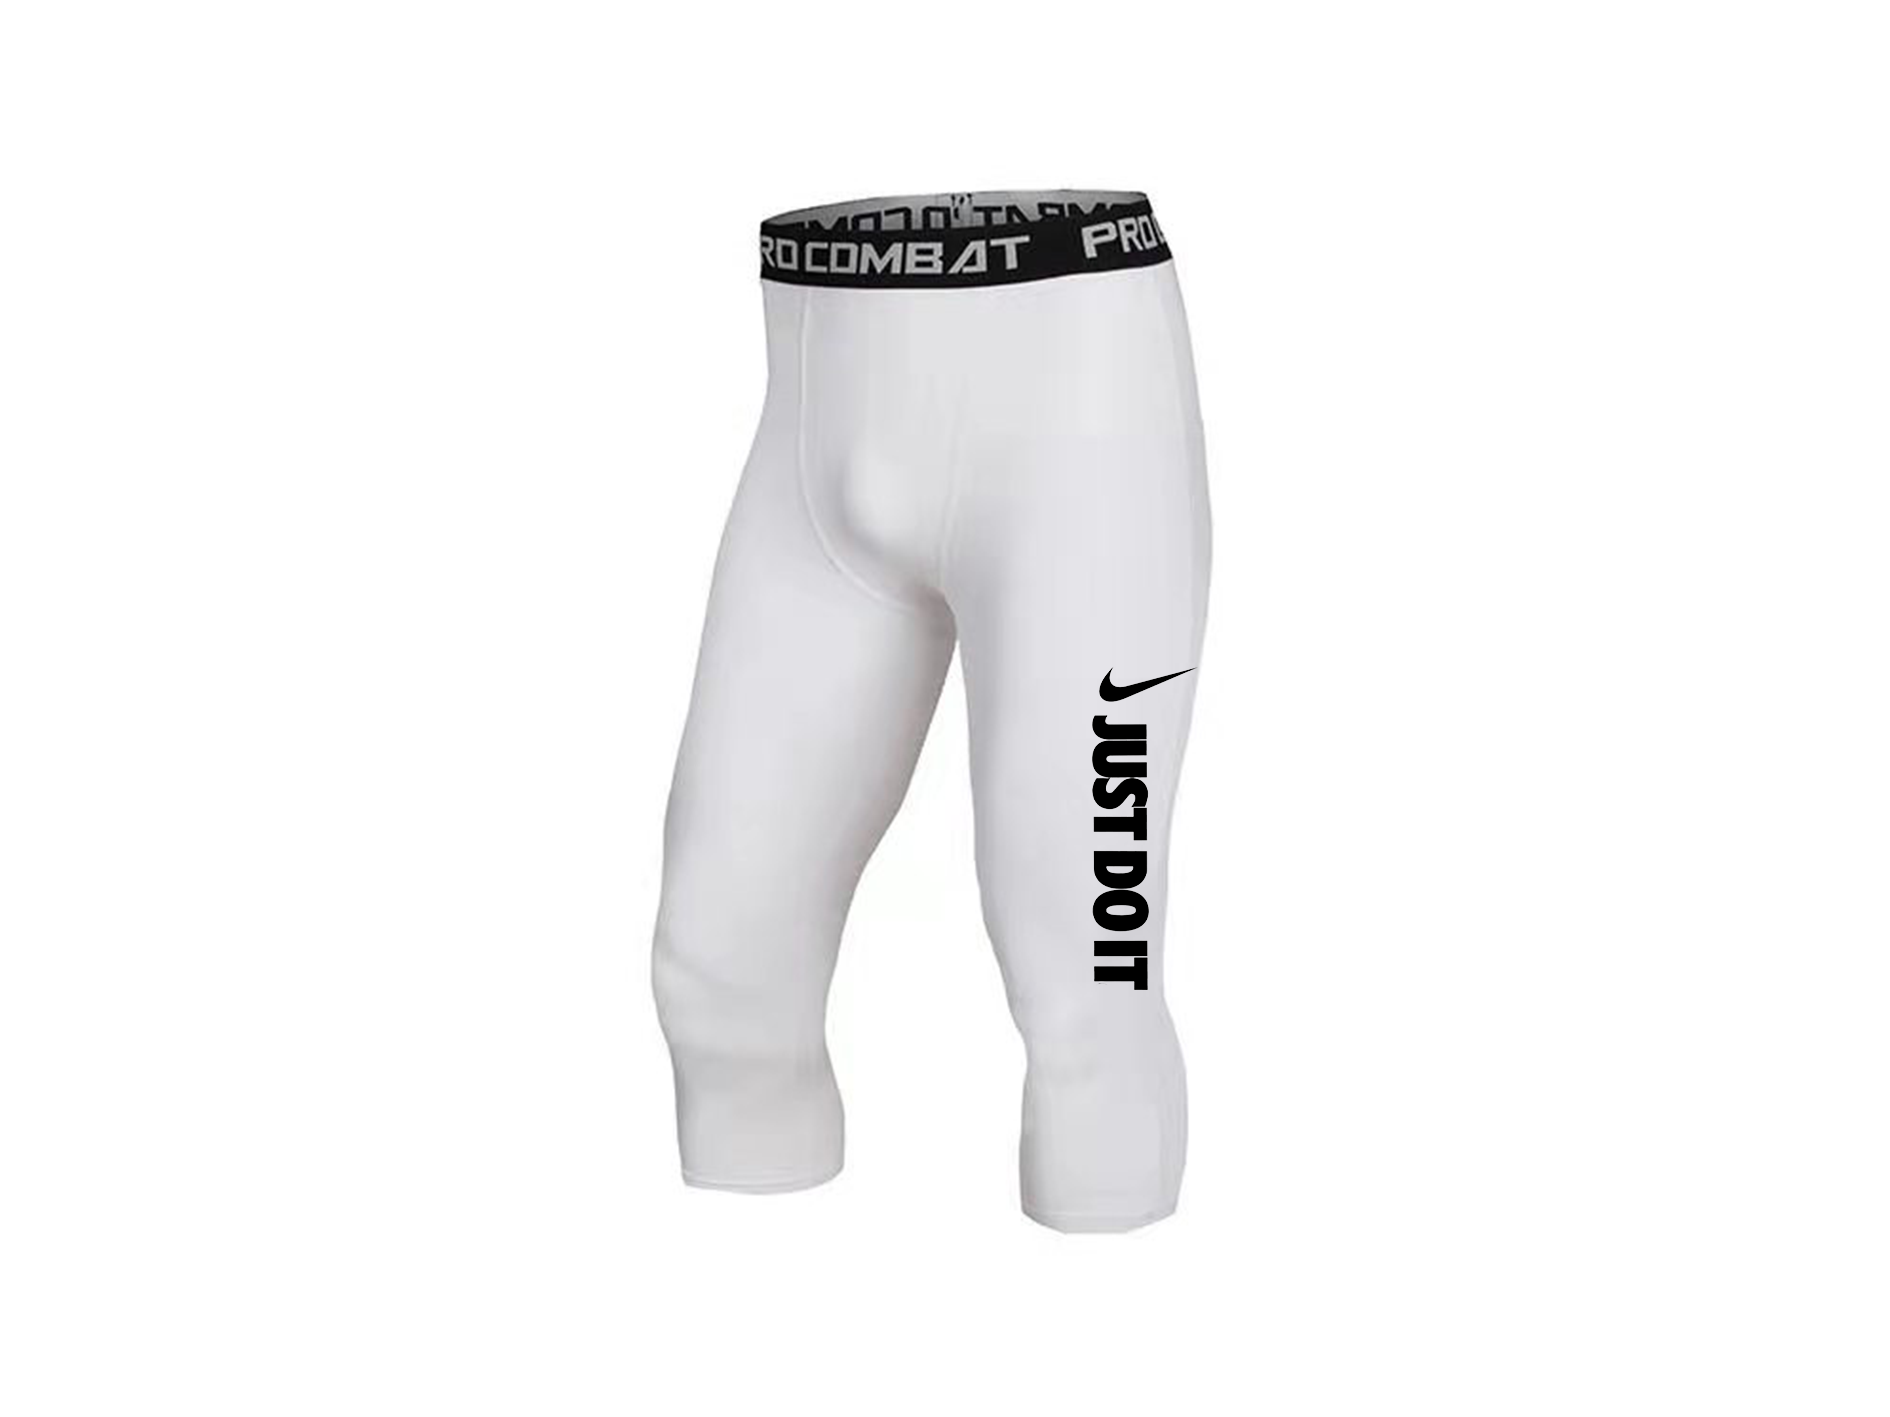 Compression Shorts 3/4 Length Tights Pants Running Pants For Men